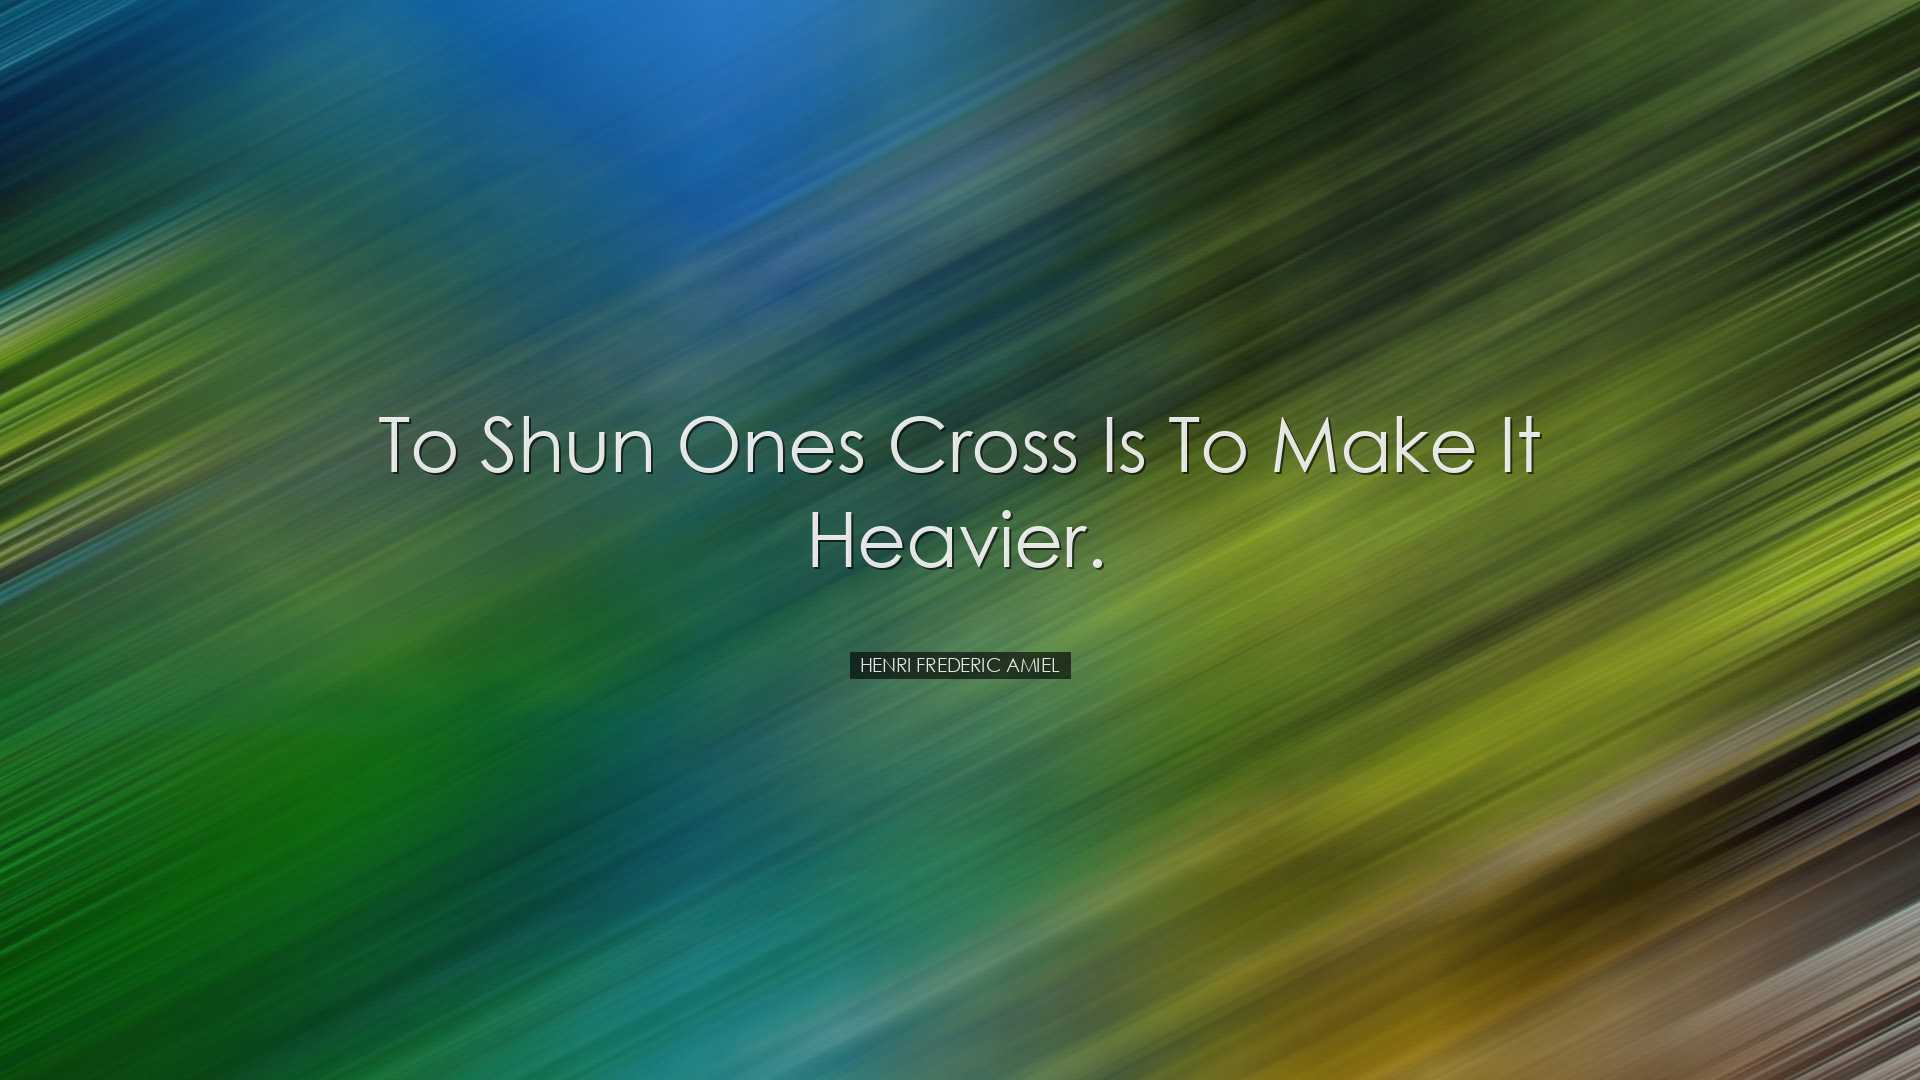 To shun ones cross is to make it heavier. - Henri Frederic Amiel